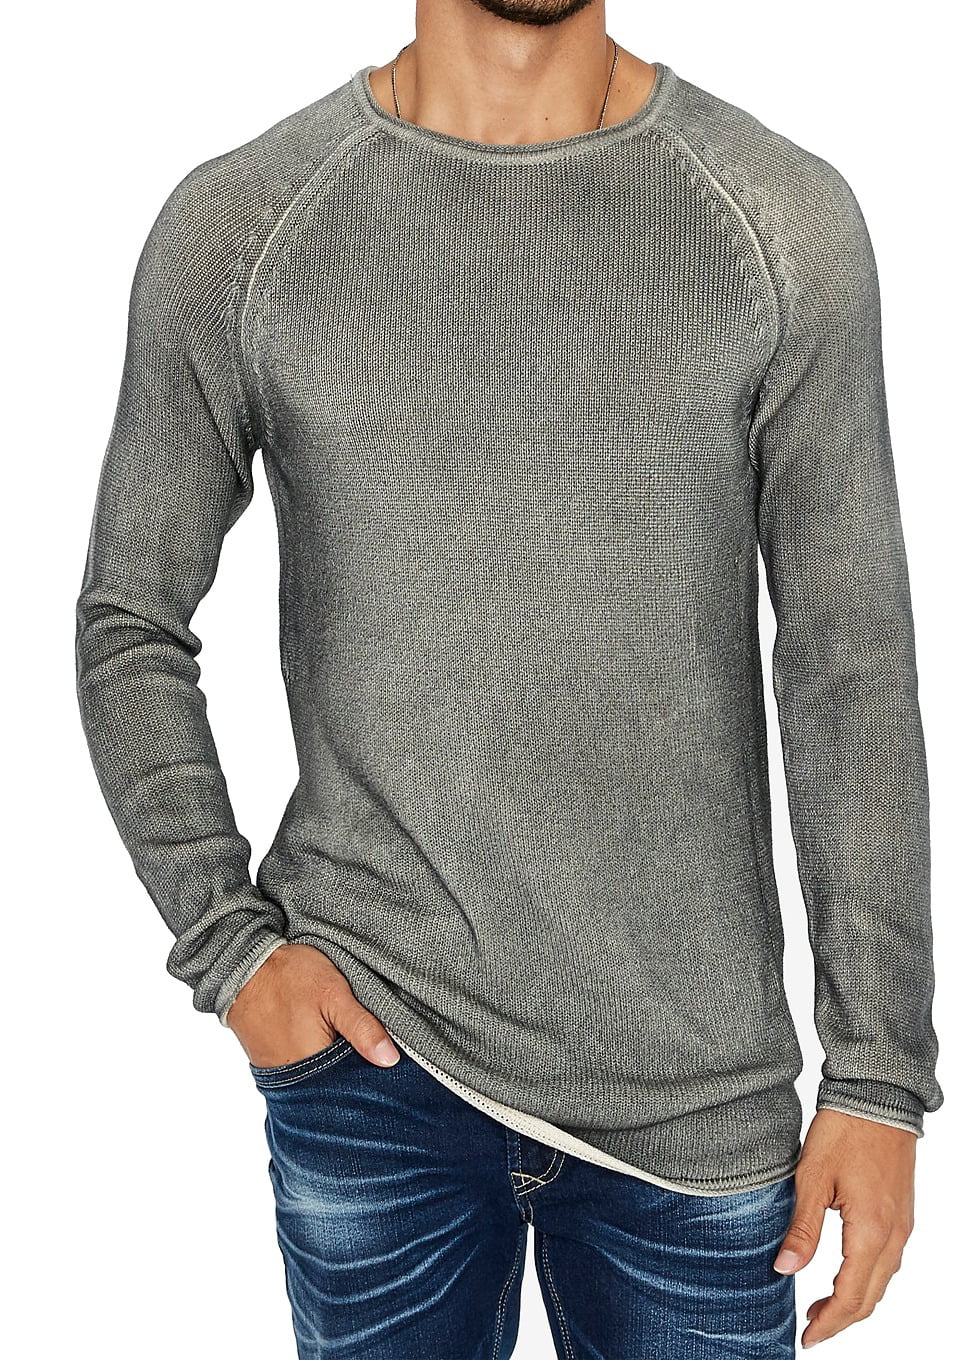 Buffalo Jeans - Mens Sweater Large Crewneck Loose-Knit L - Walmart.com ...